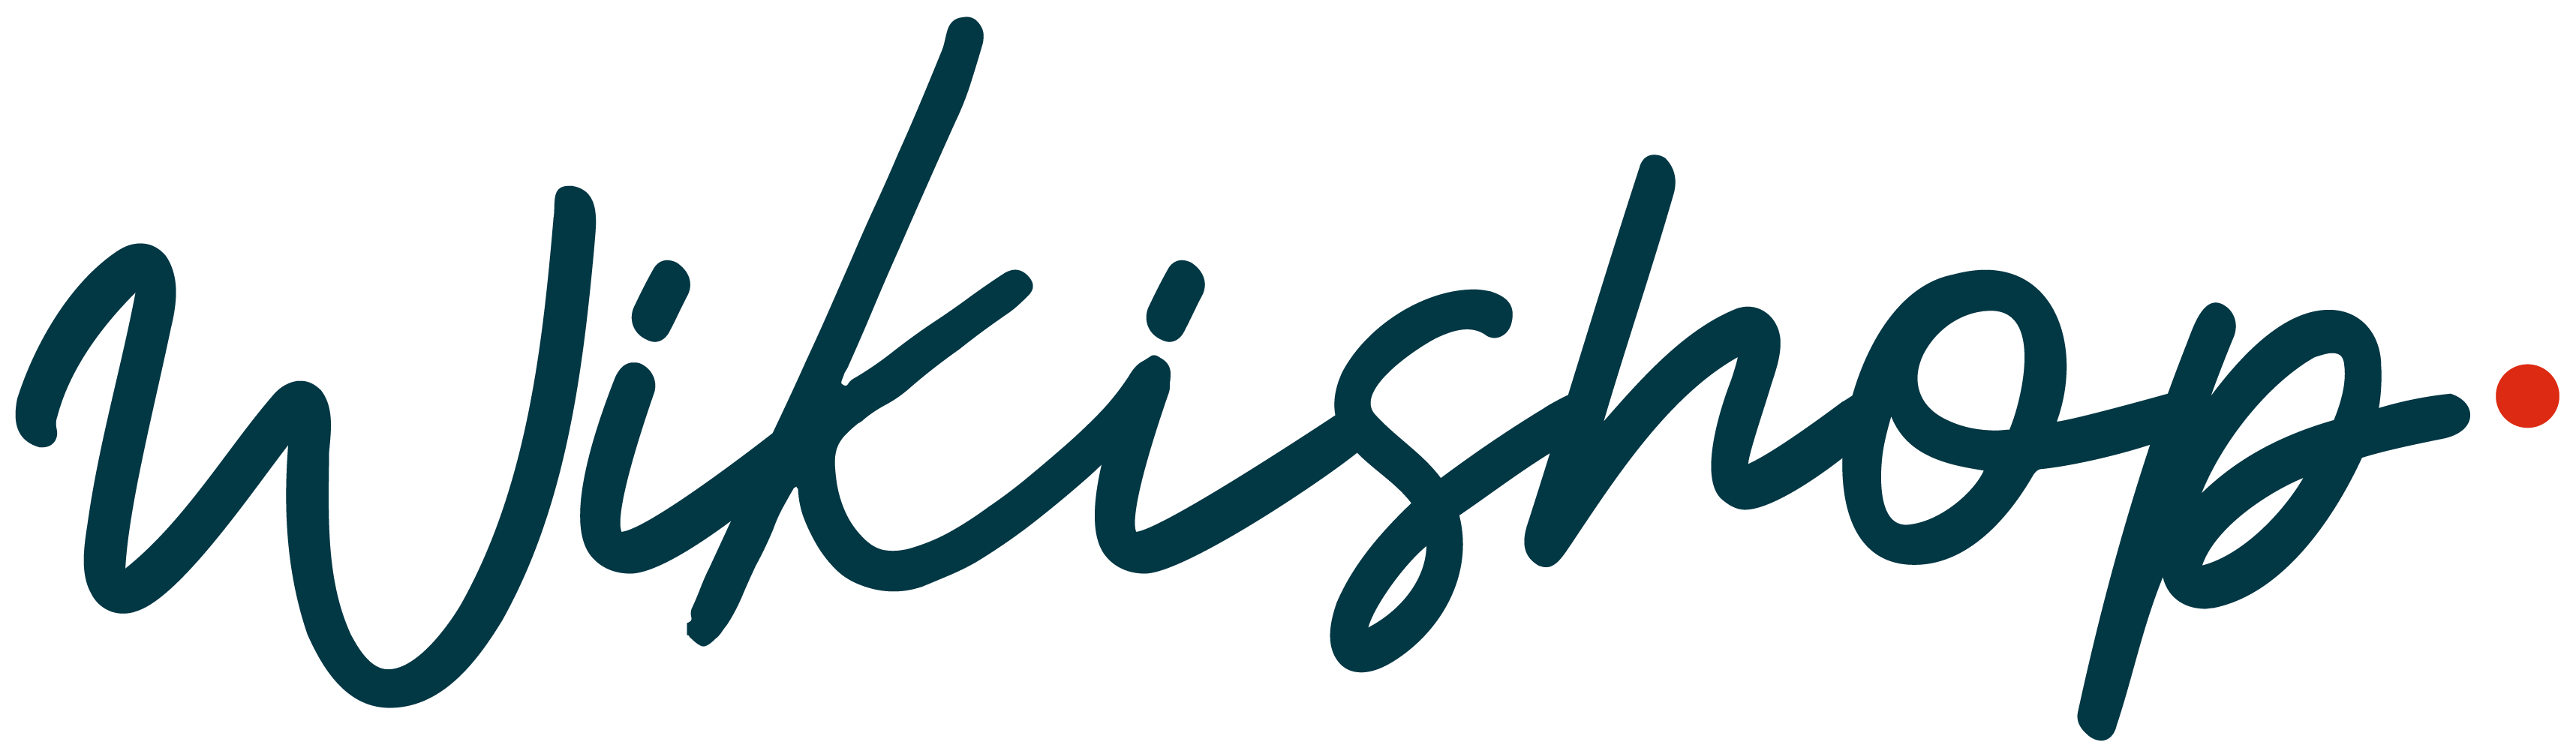 WikiShop logo